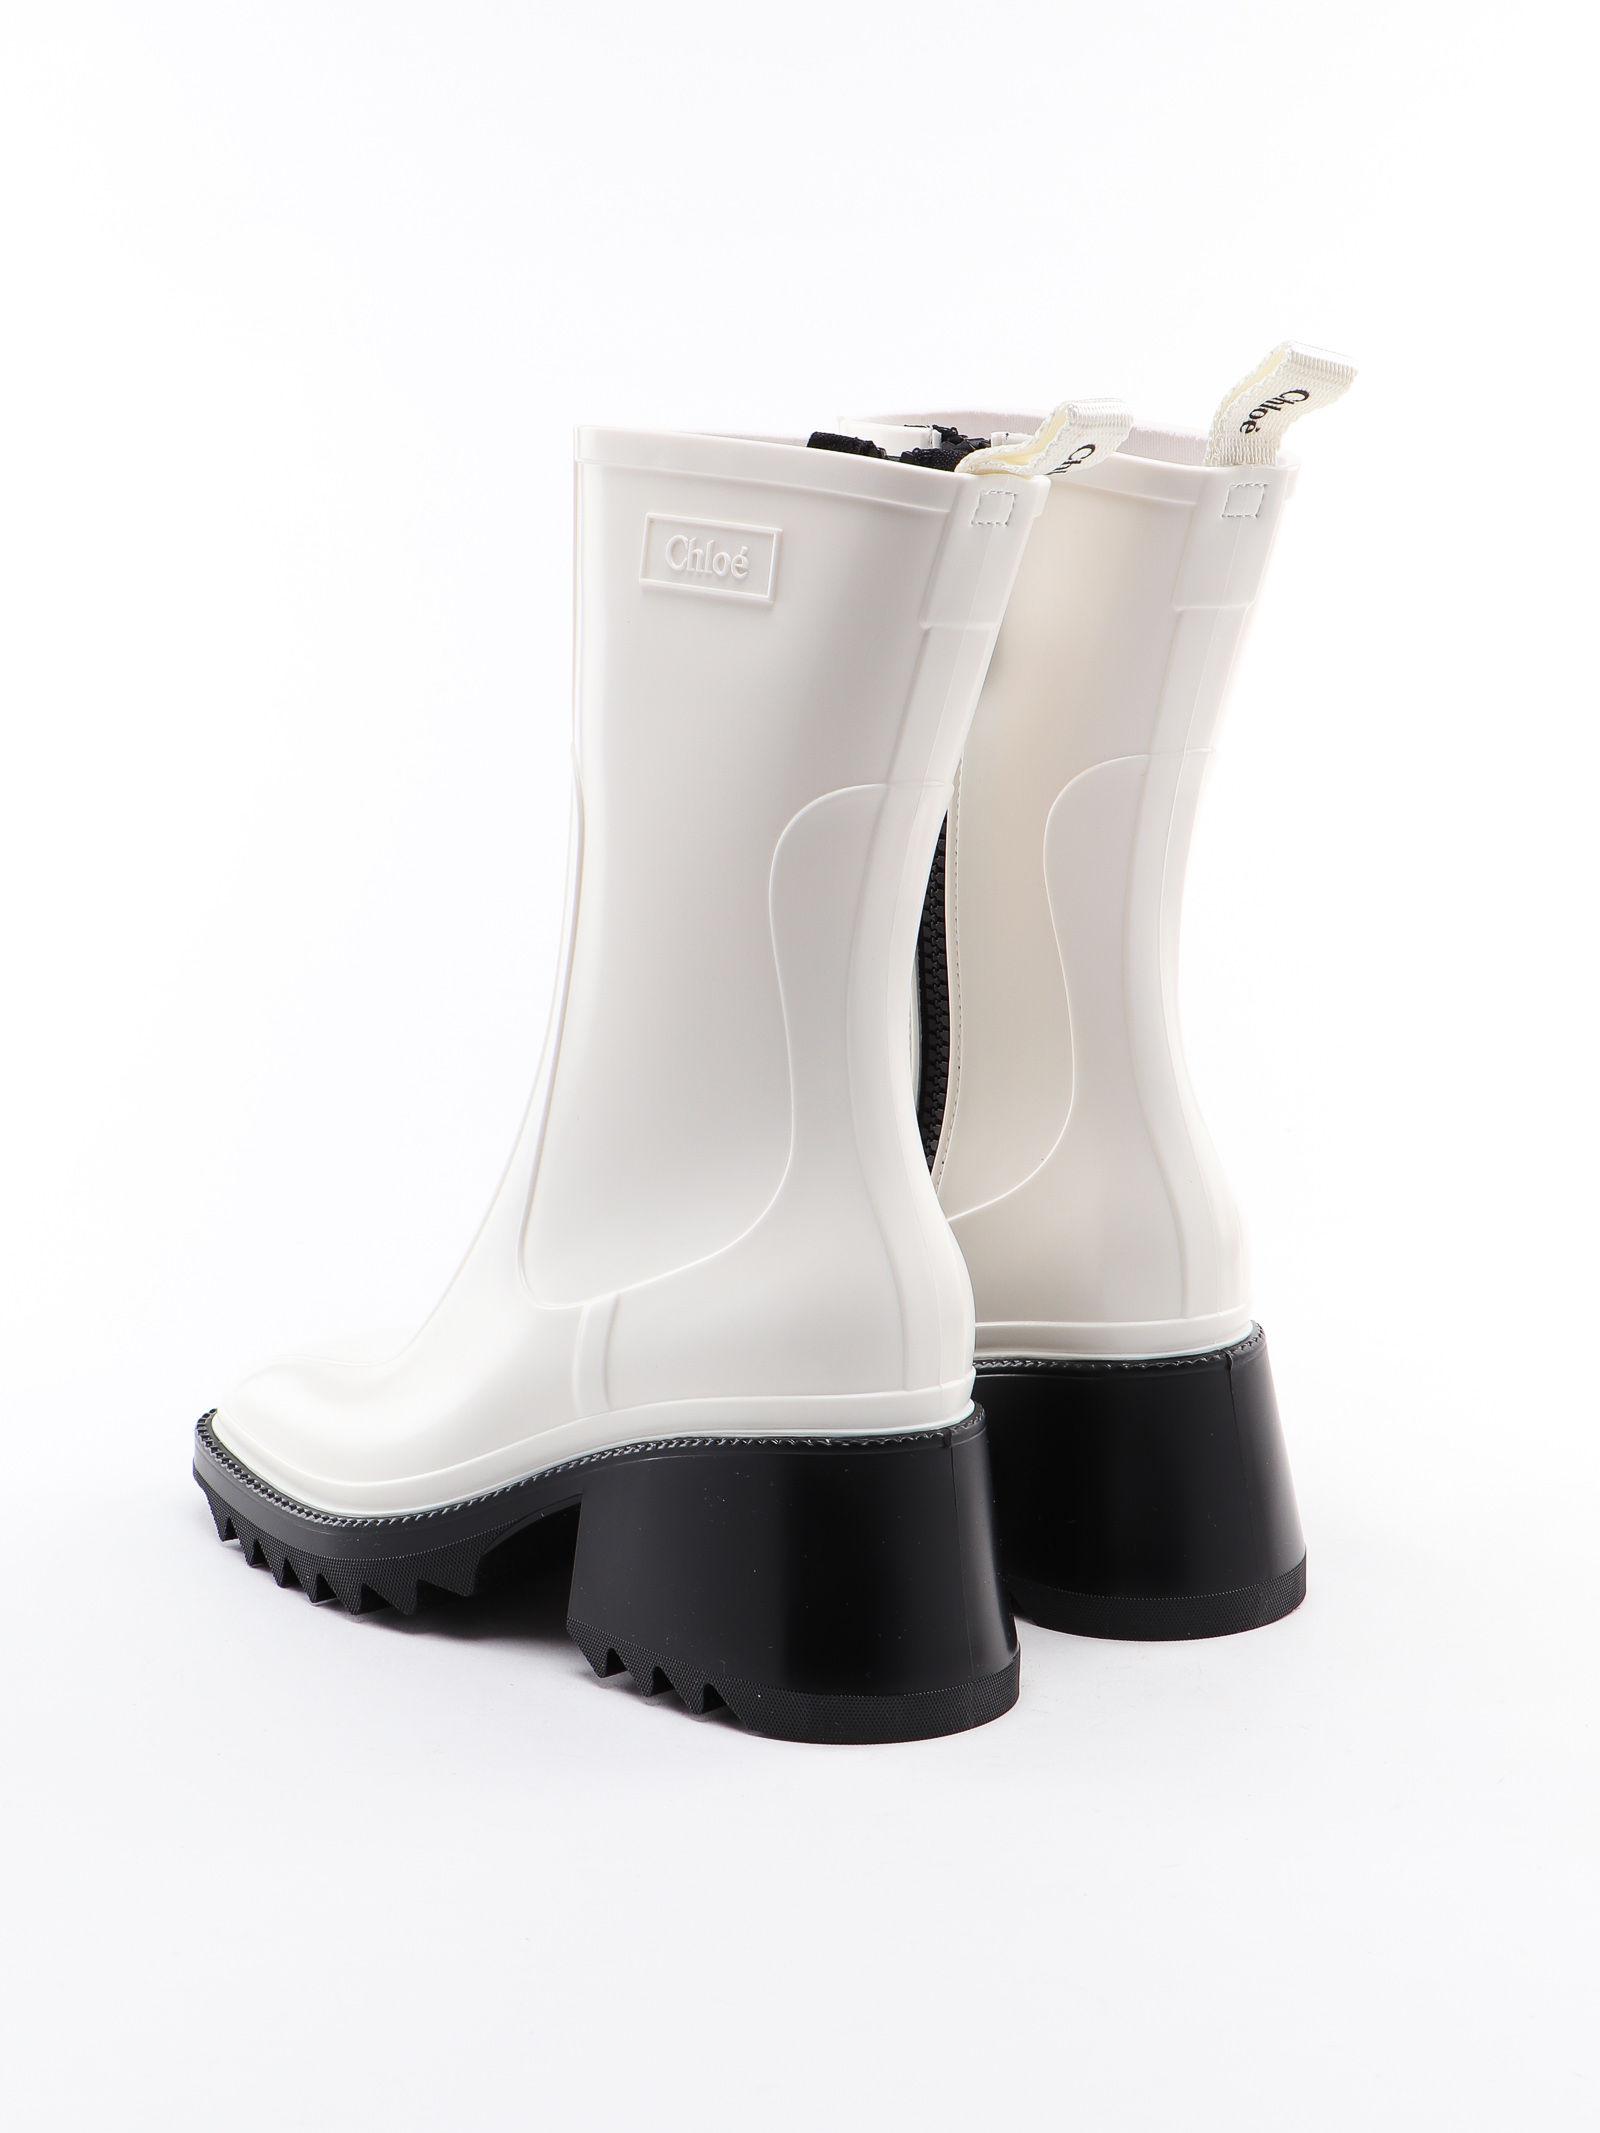 Chloé Rubber Rain Boots Betty 50 in White - Lyst